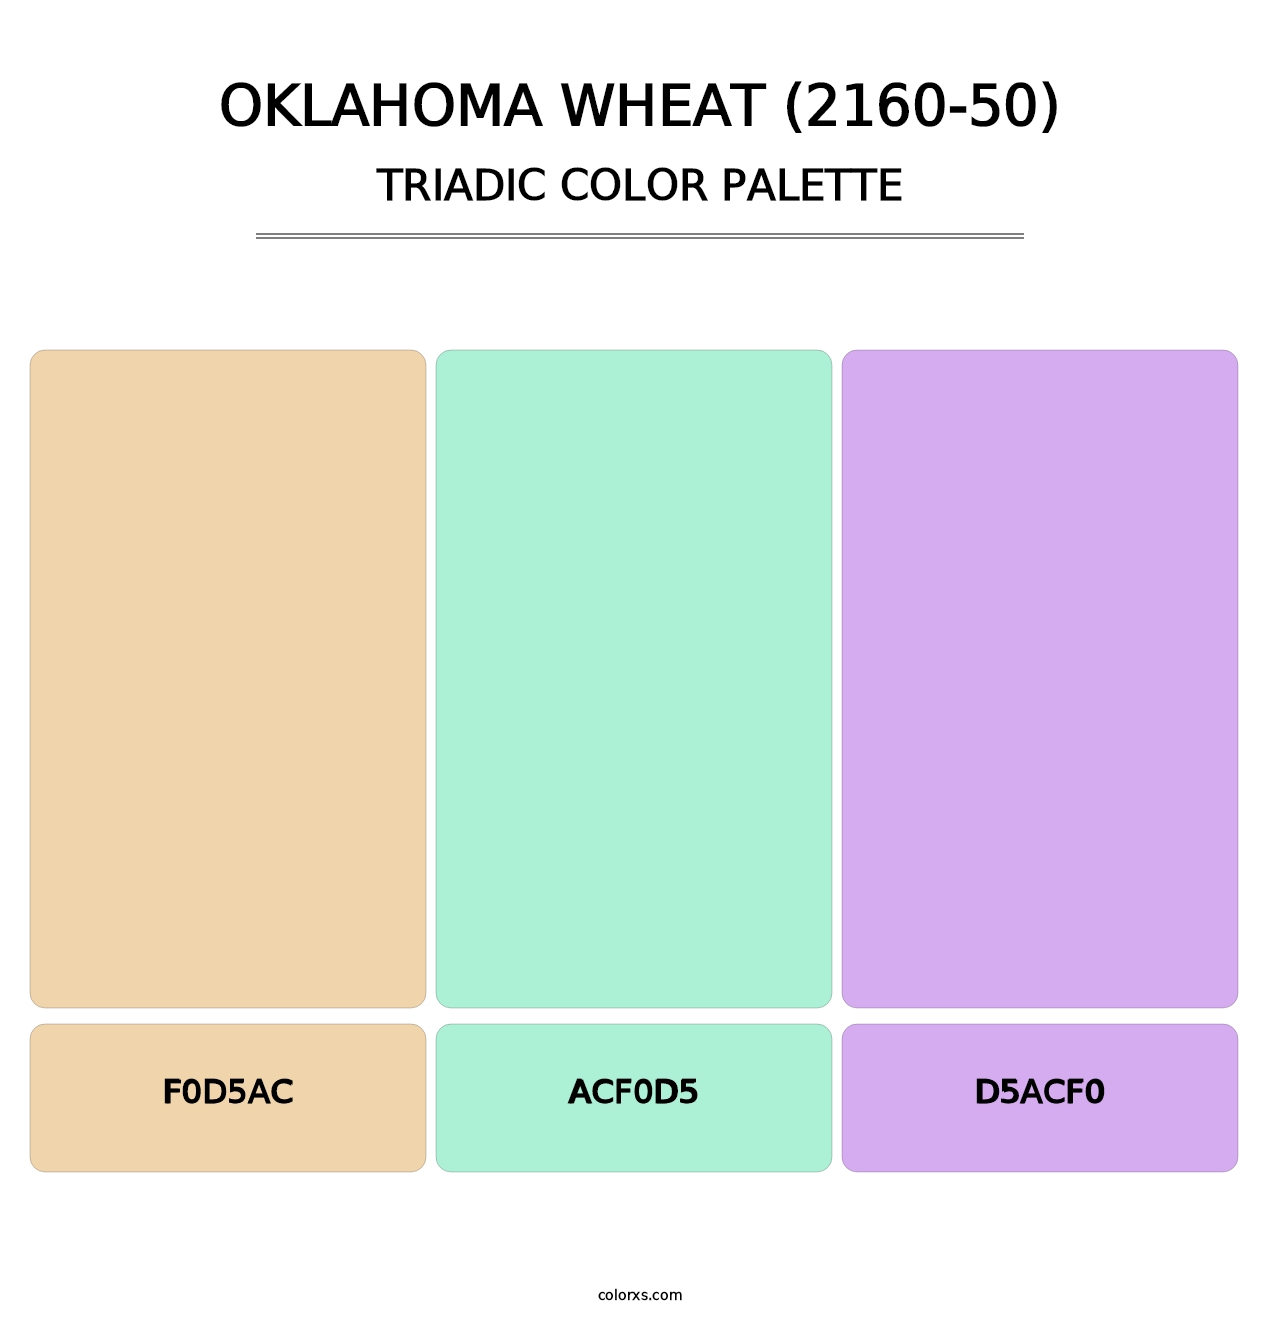 Oklahoma Wheat (2160-50) - Triadic Color Palette